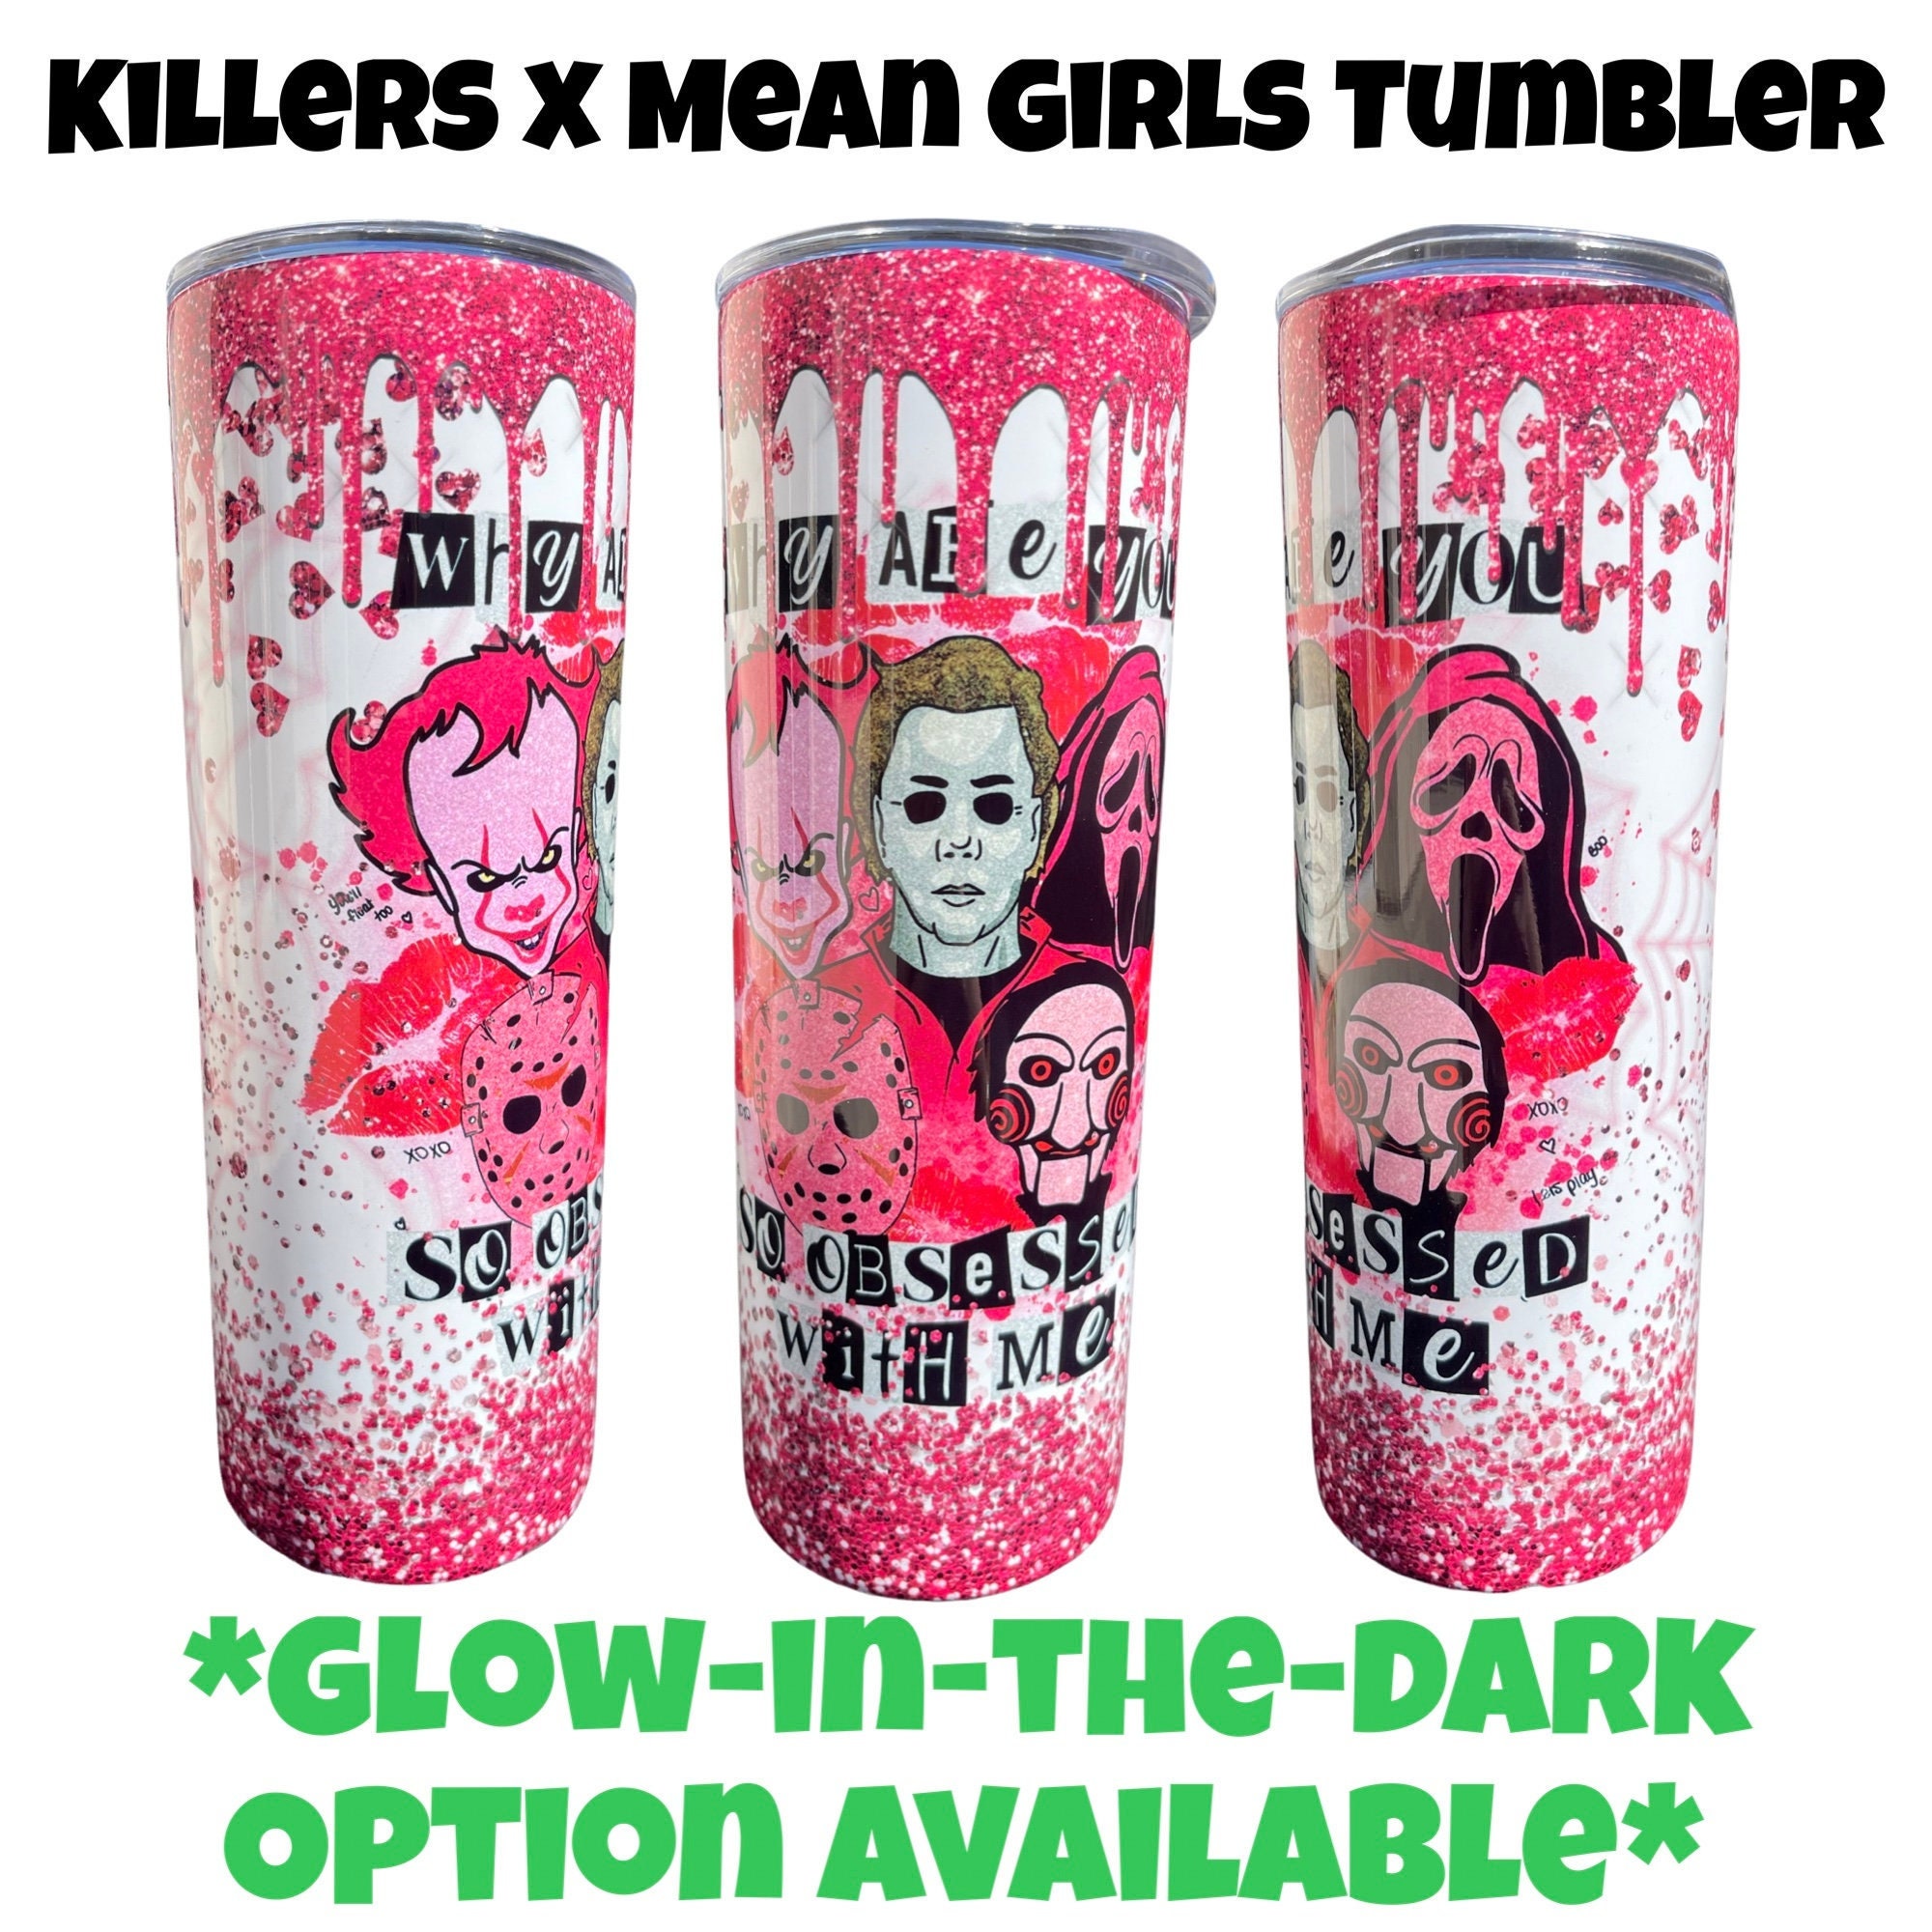 Killers X Mean Girls Tumbler